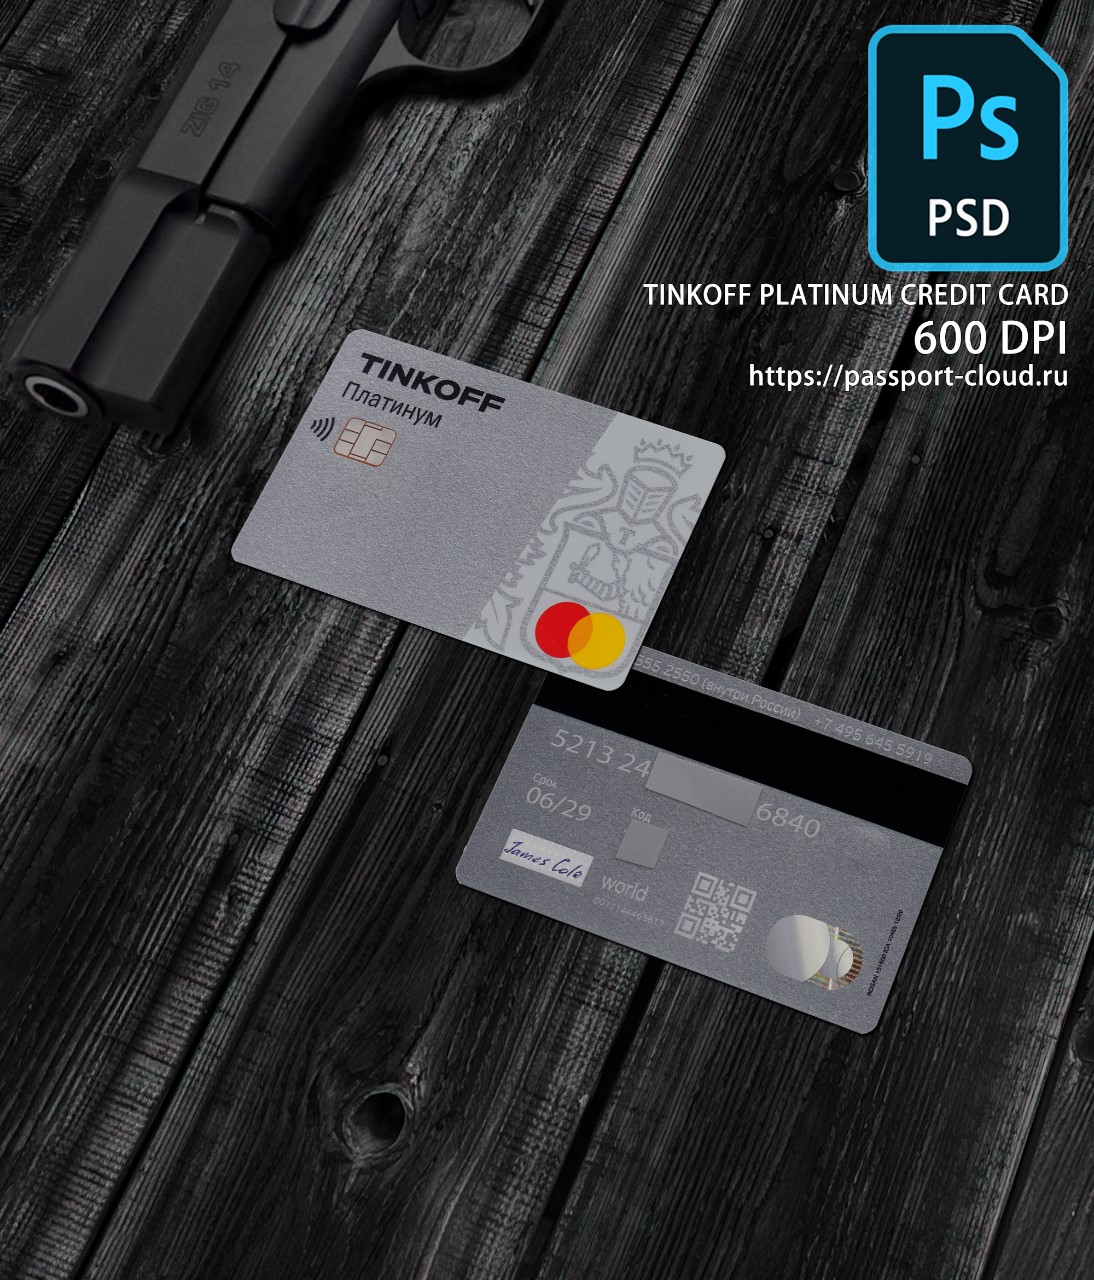 Tinkoff Platinum Credit Card PSD1